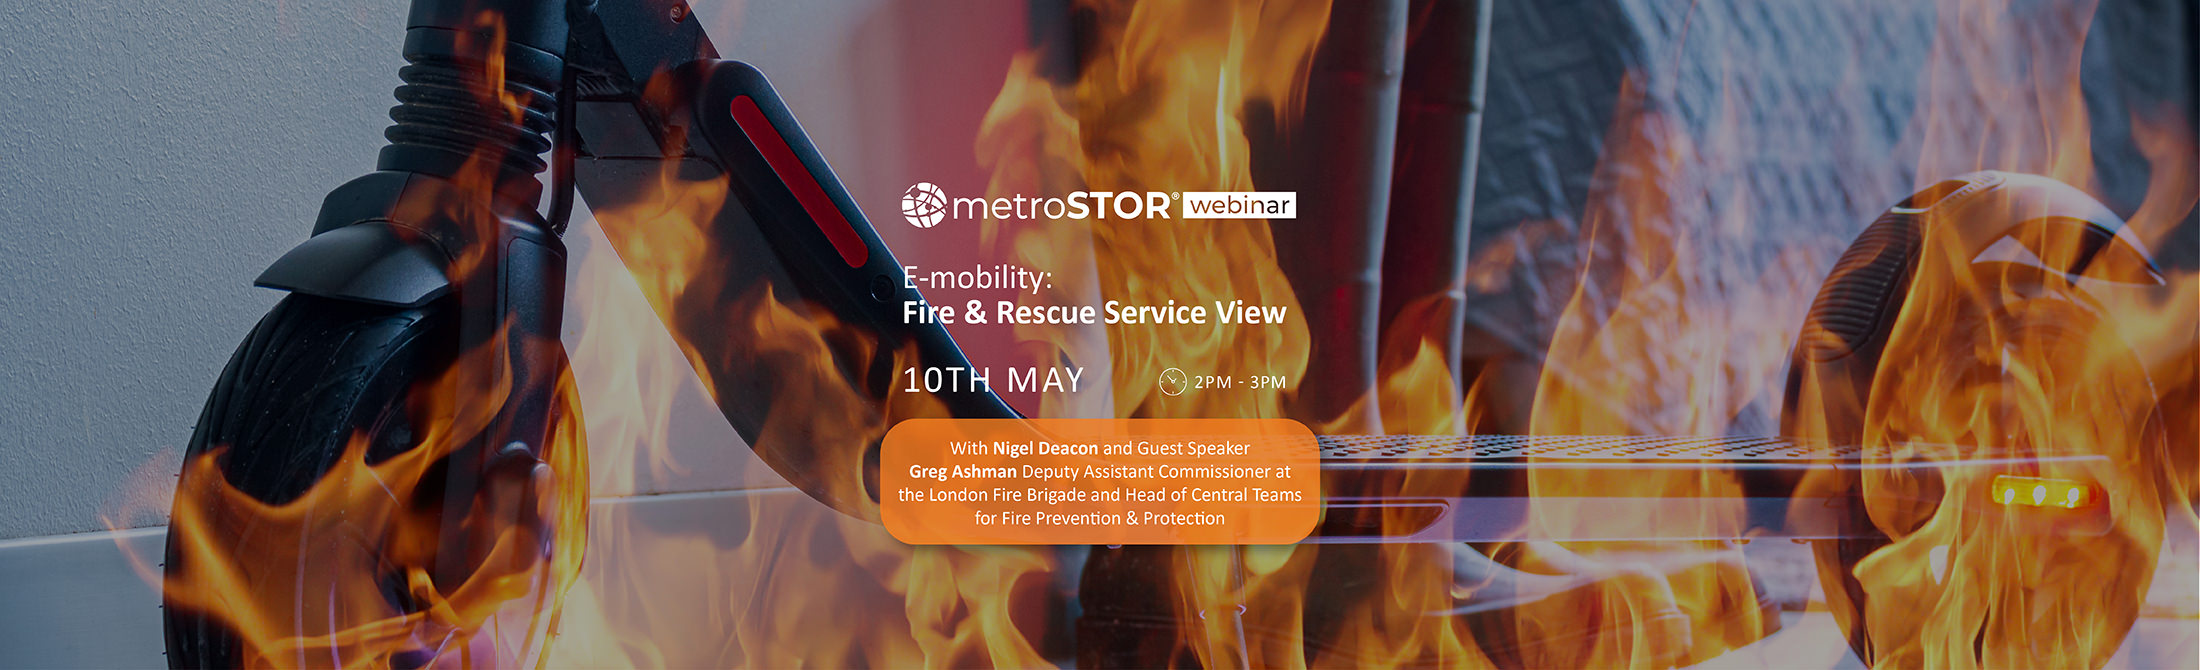 metroSTOR Webinar: e-mobility - A Fire & Rescue Service View